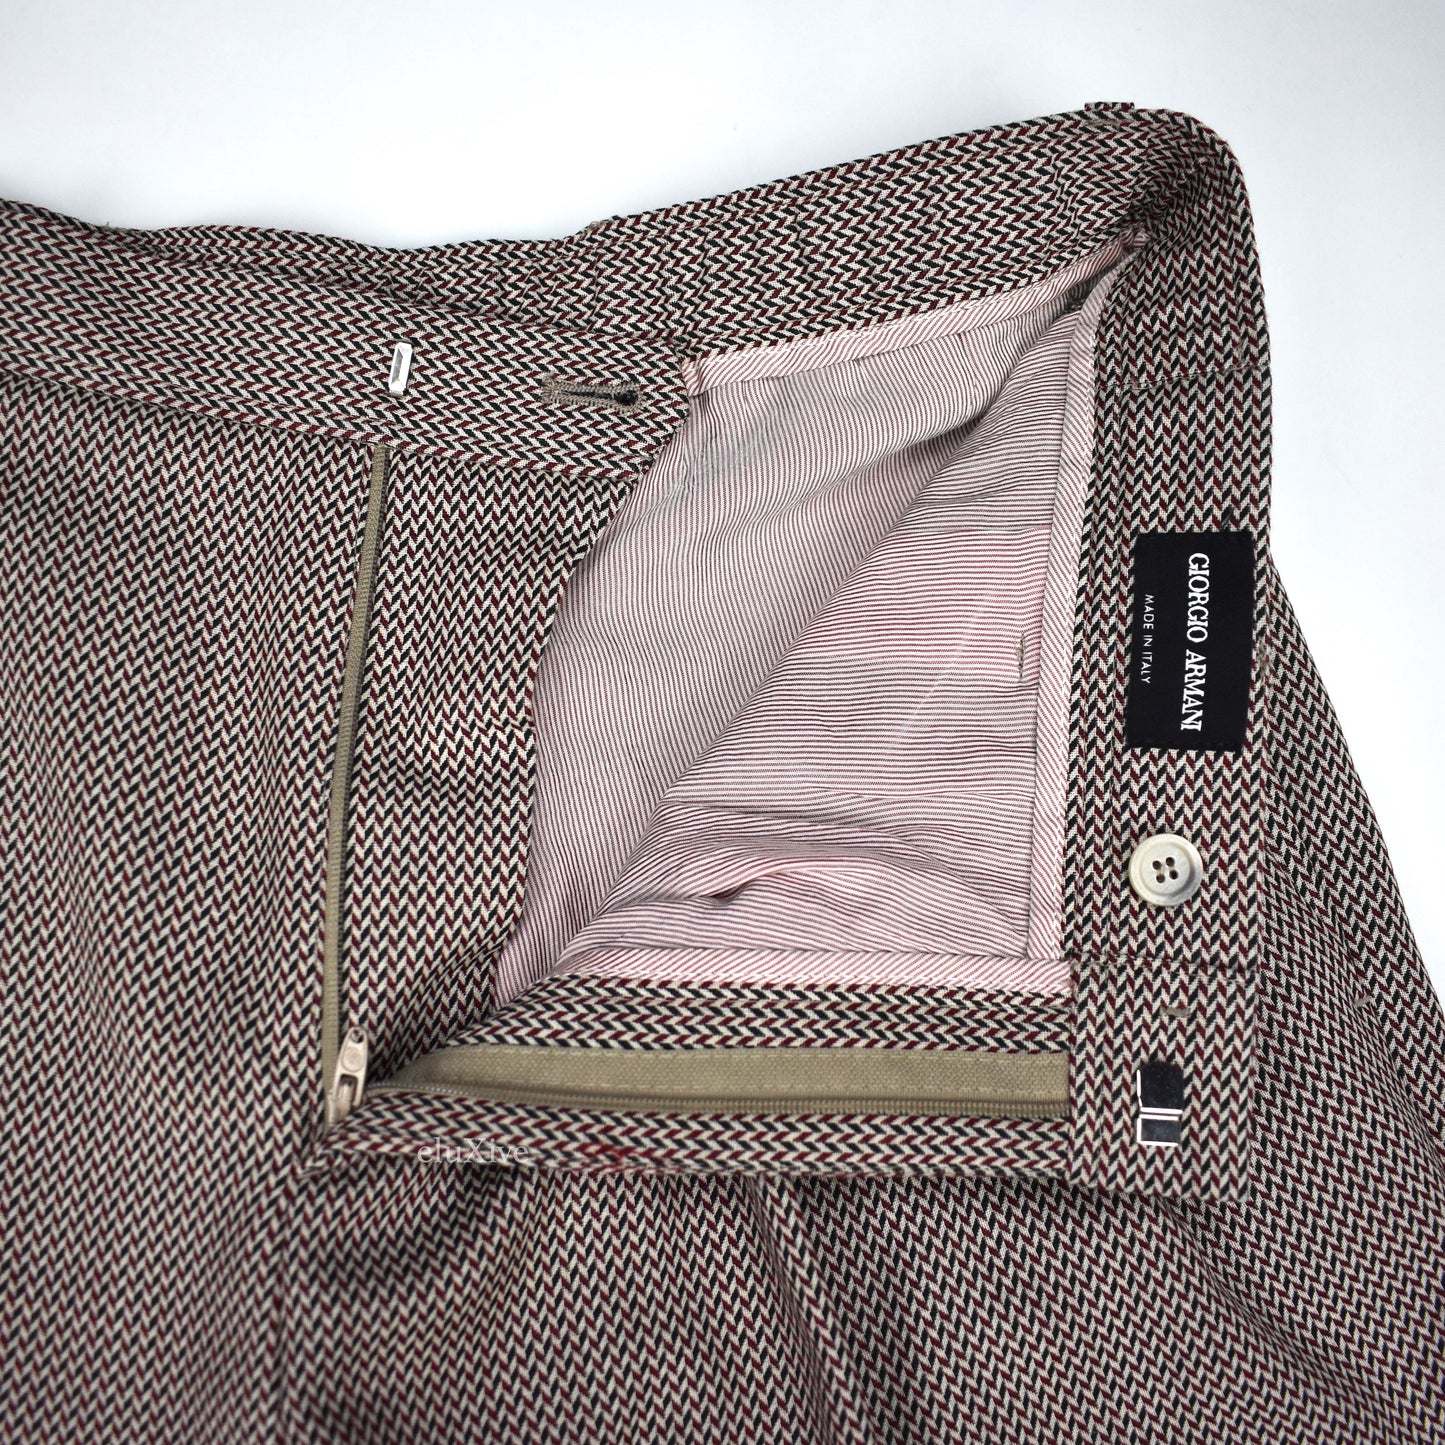 Giorgio Armani - Chevron Woven Wool Pants